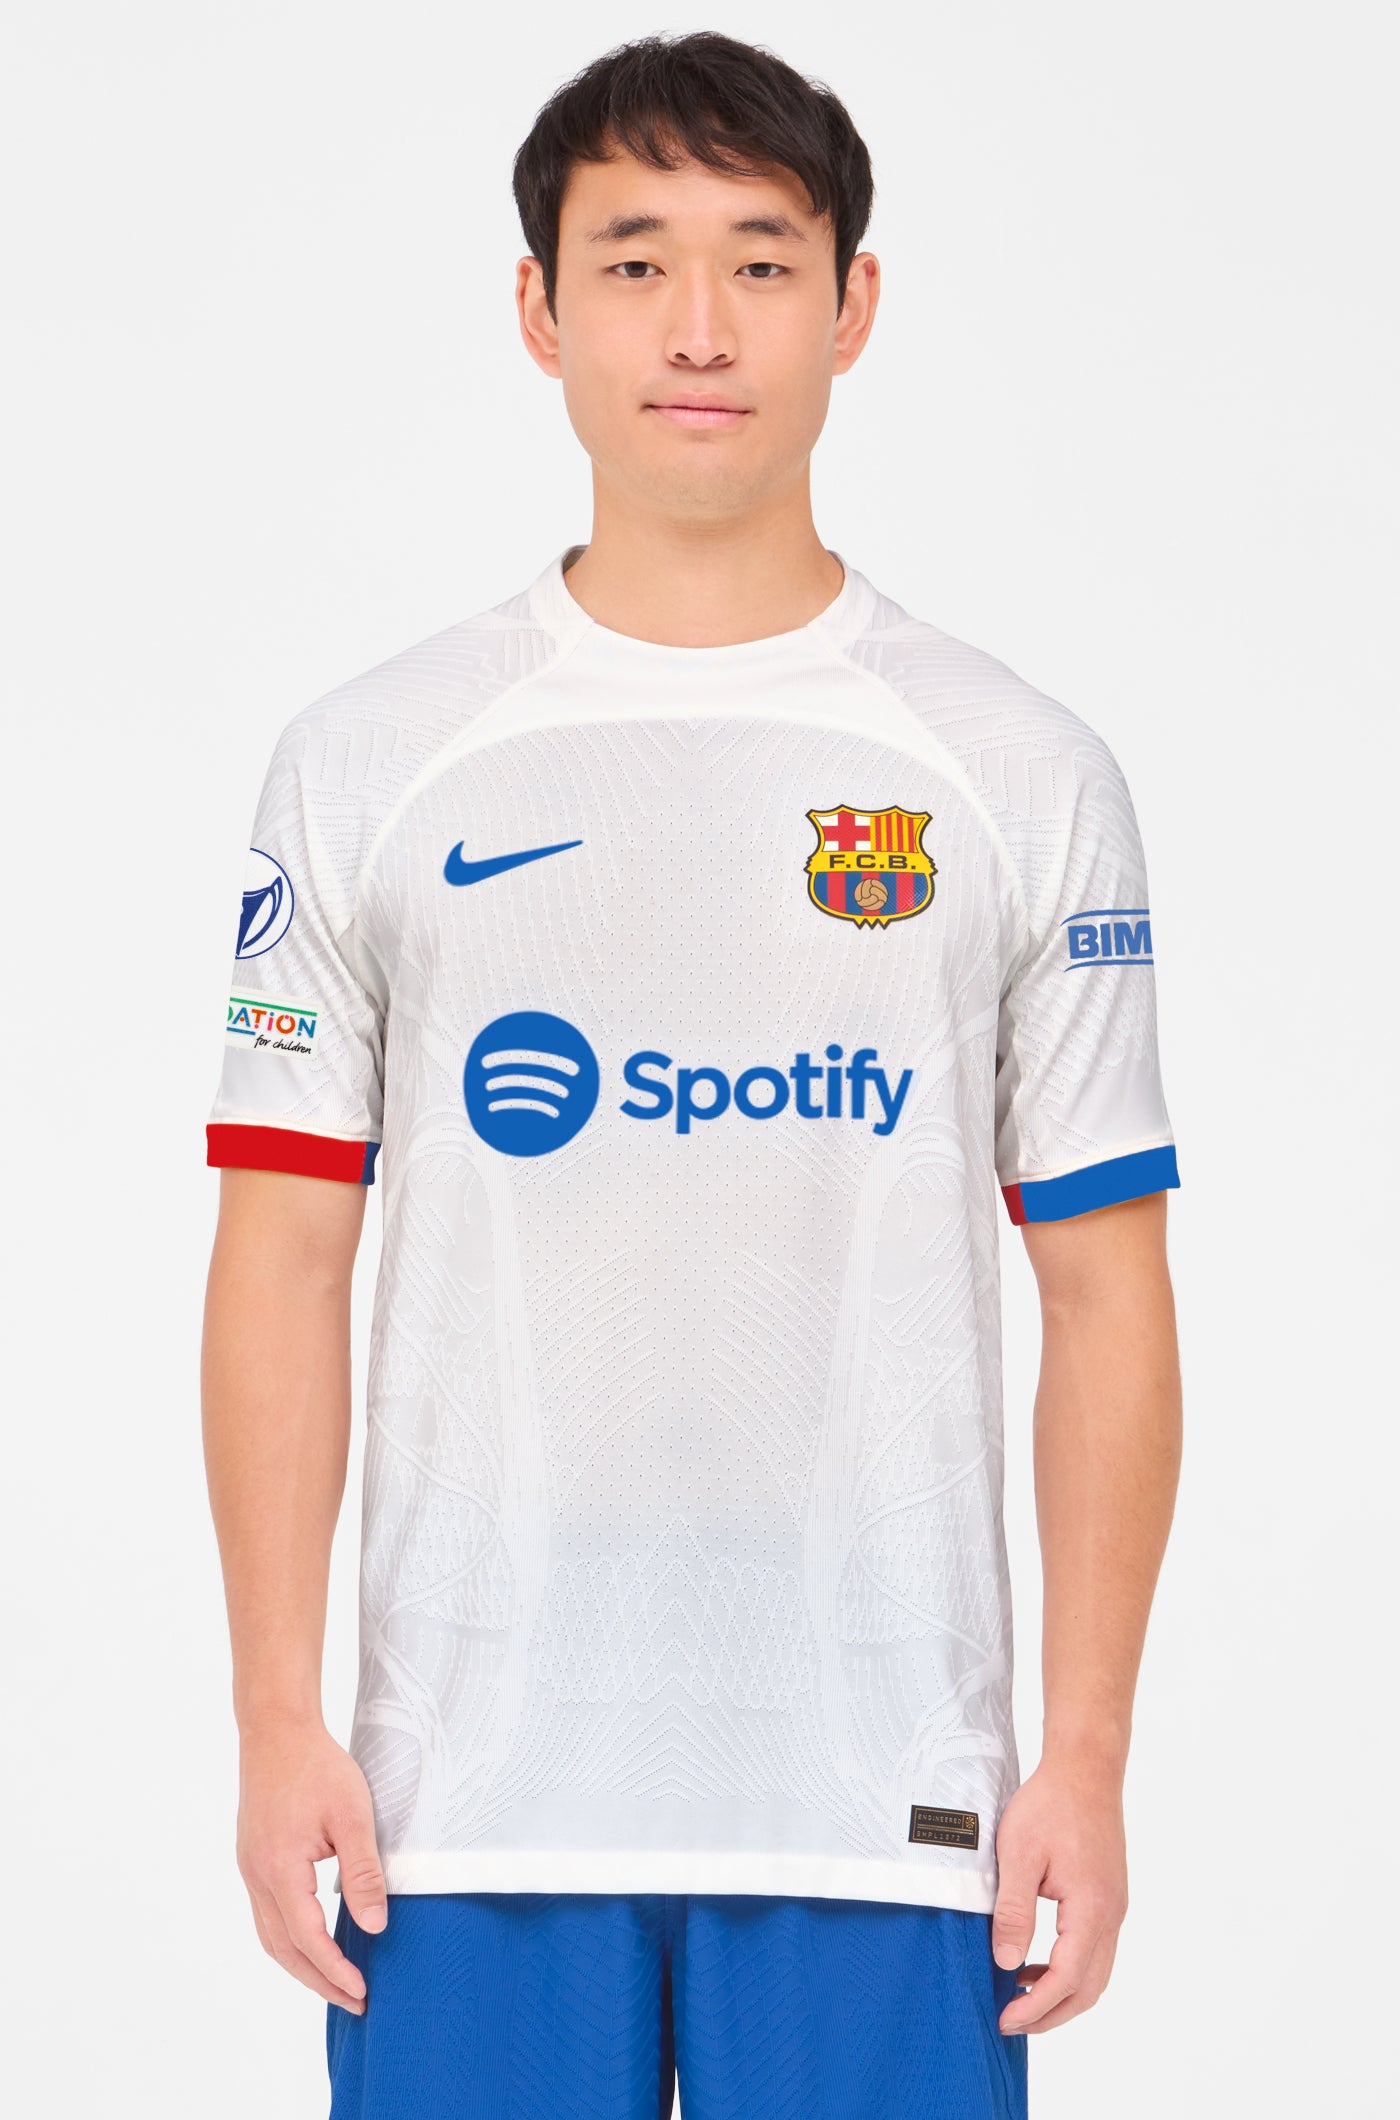 UWCL FC Barcelona away shirt 23/24 Player's Edition - MARÍA LEÓN